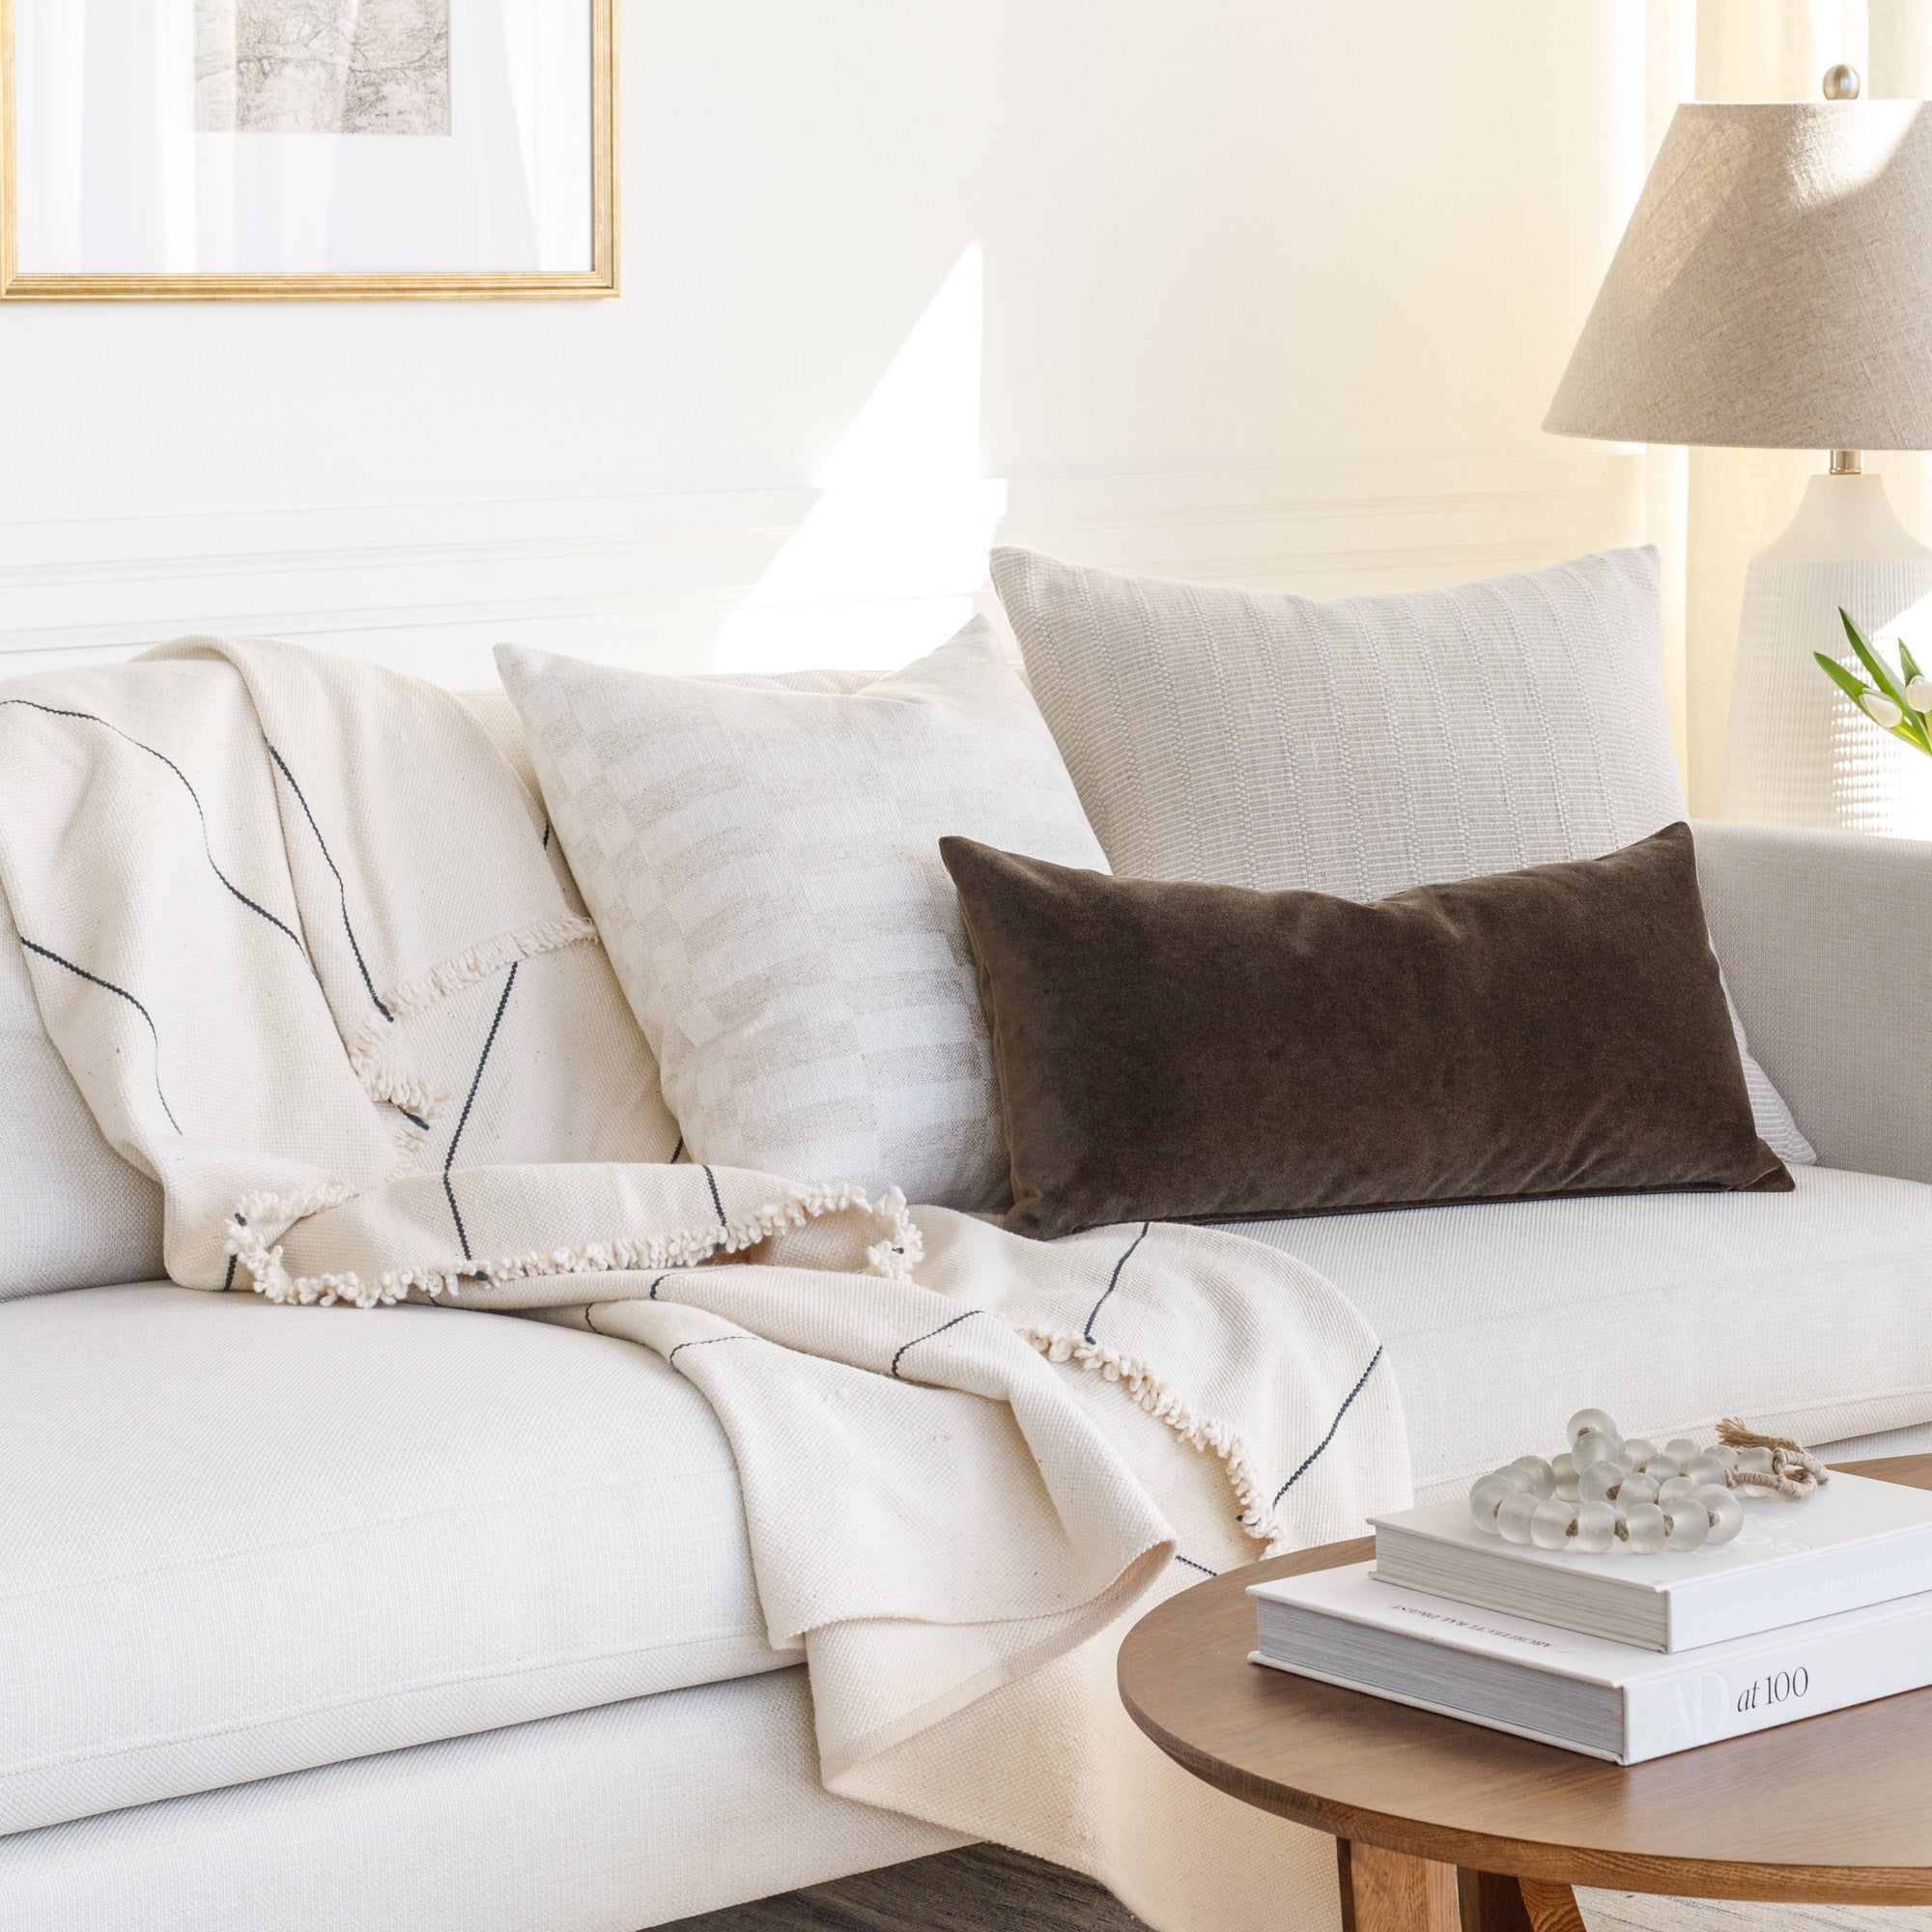 Sofa vignette: Tonic Living neutral home decor and throw blanket